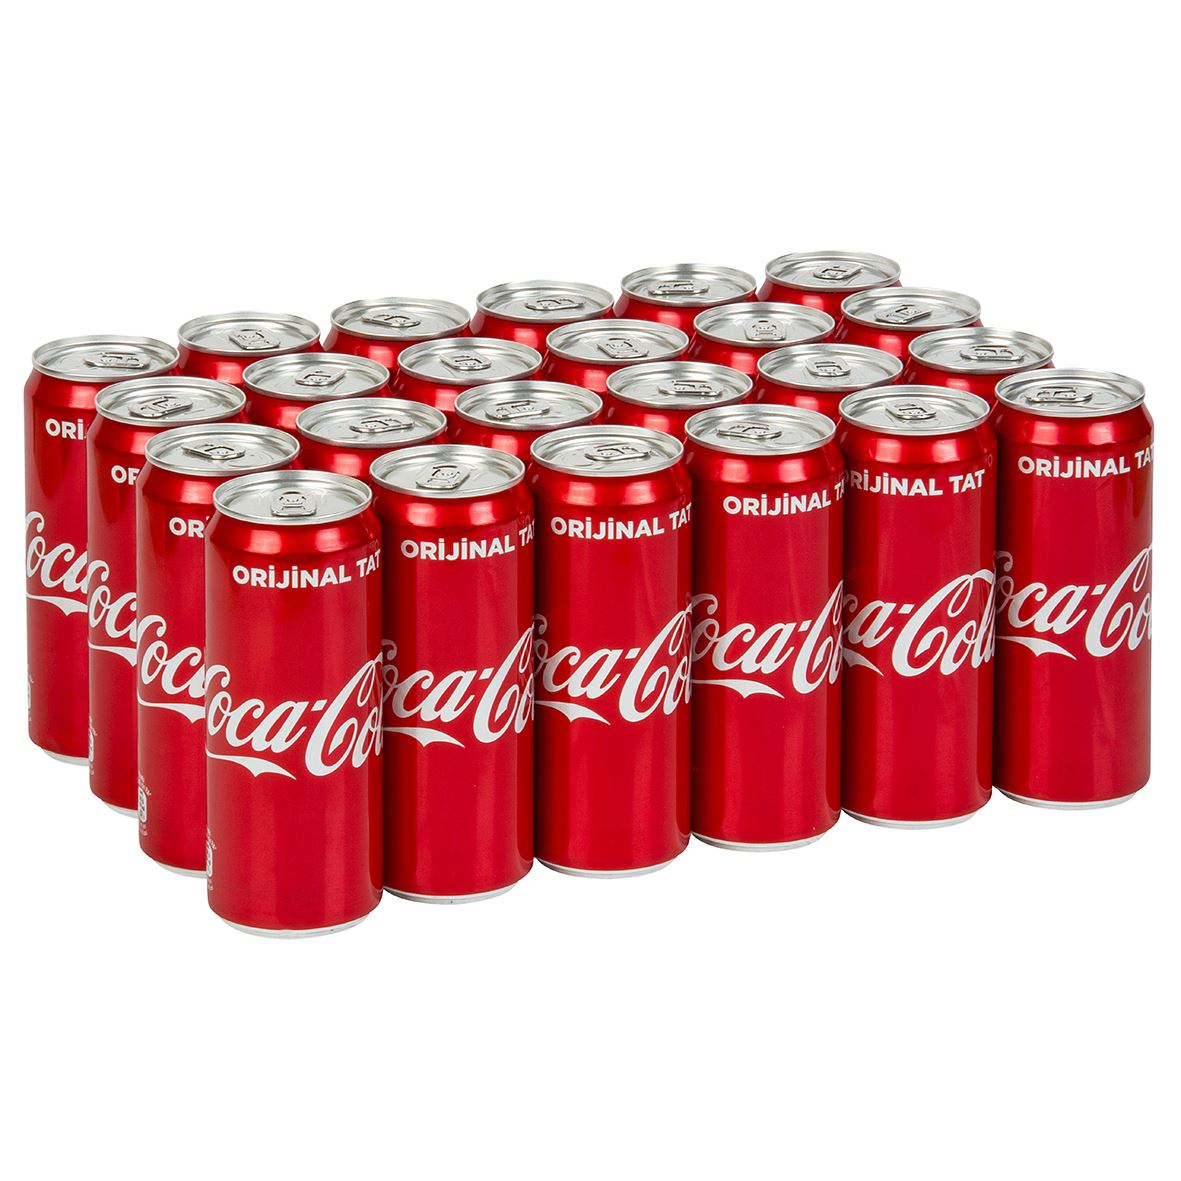 Coca Cola Kutu 330 ml 24'lü